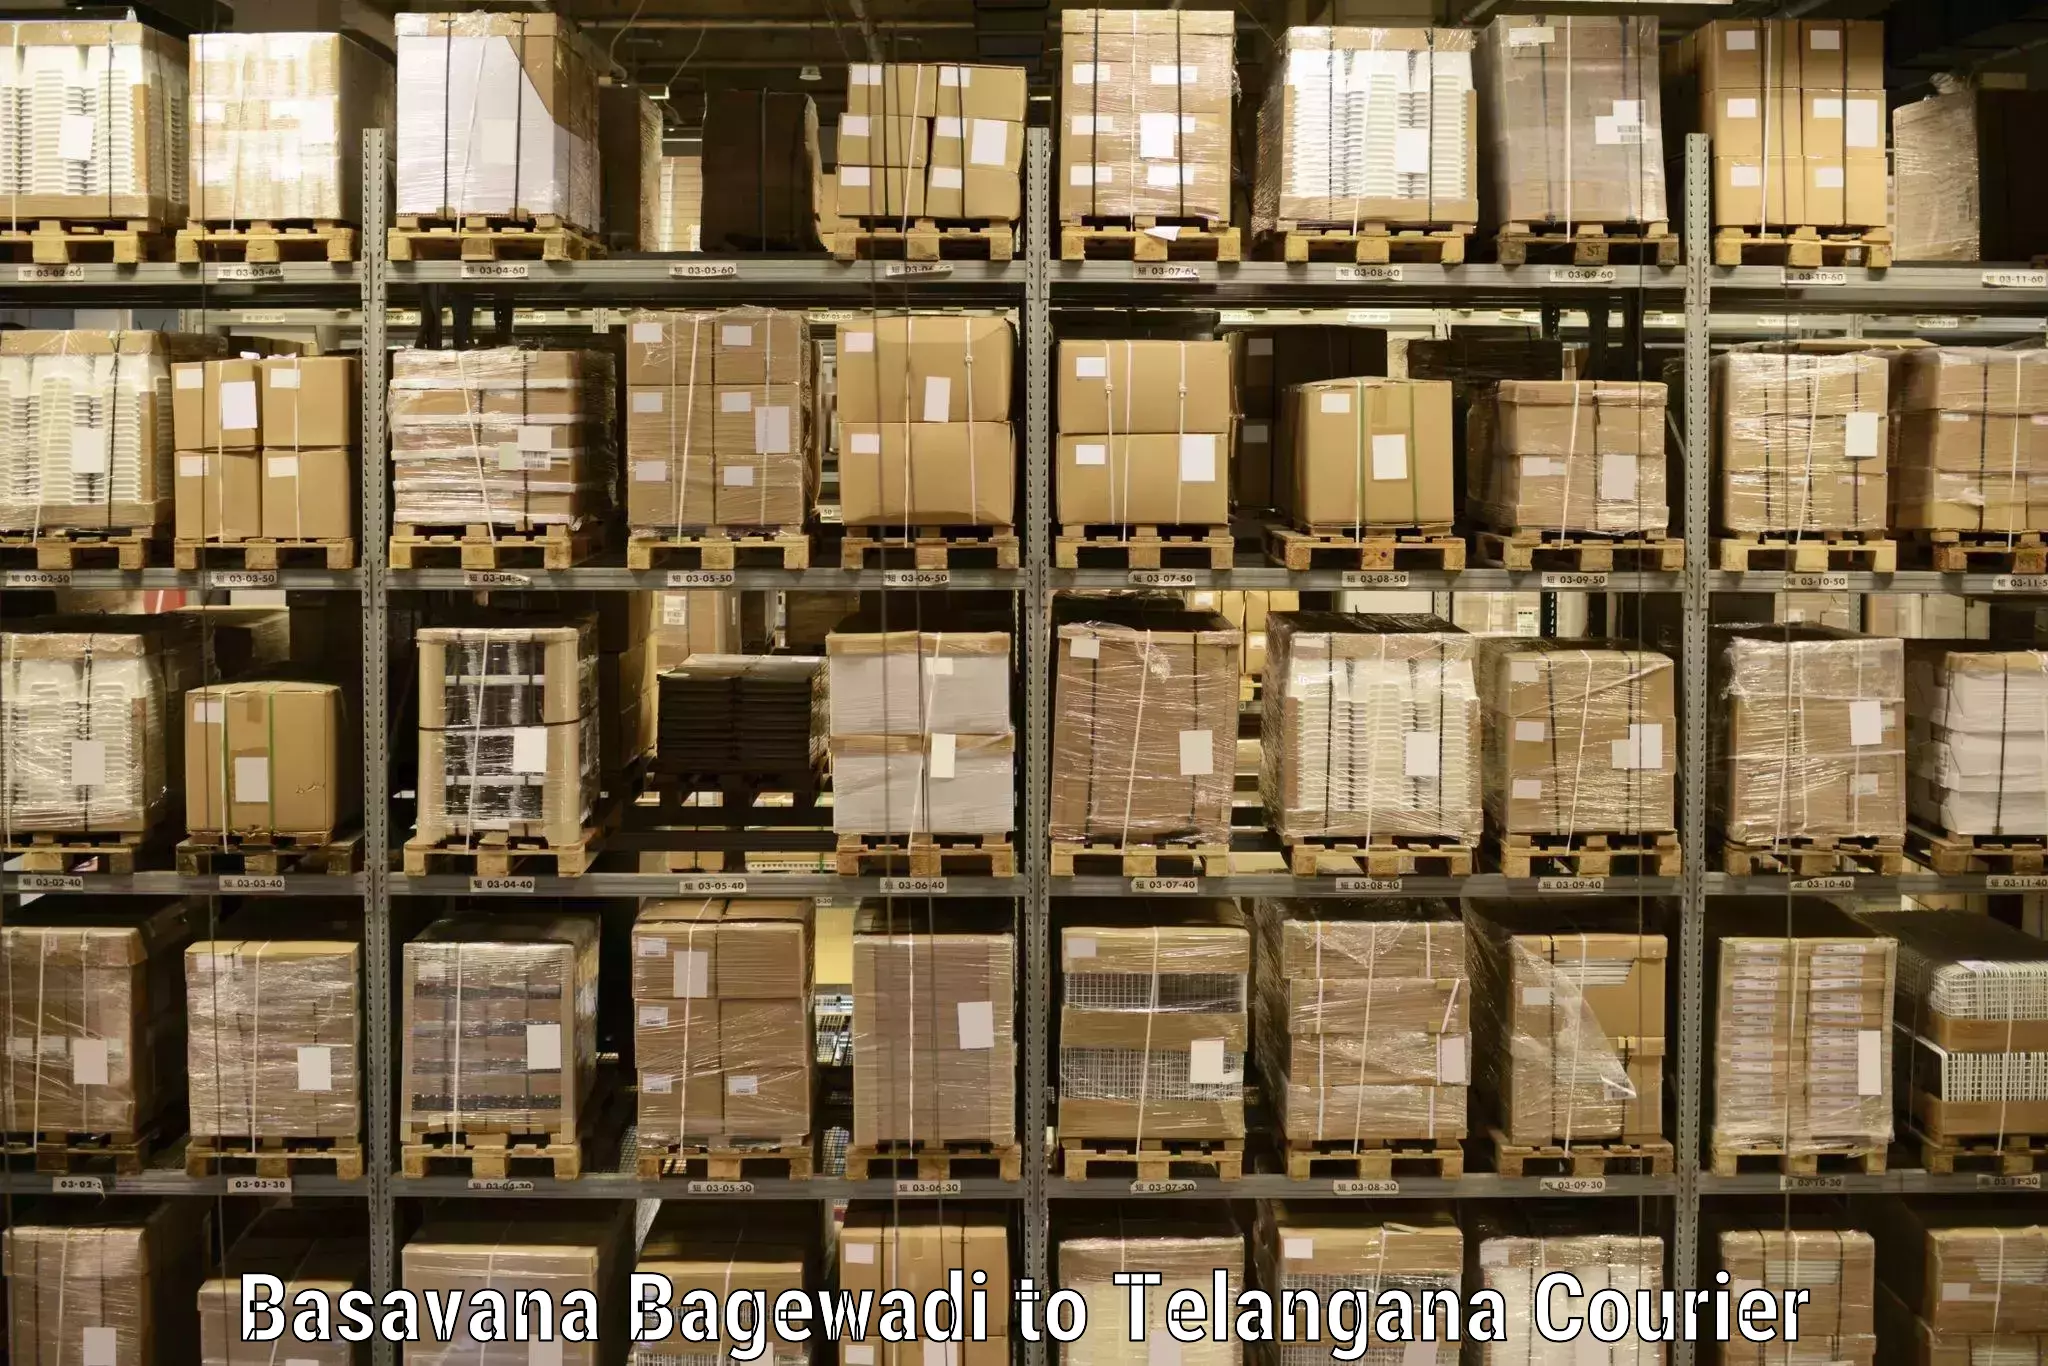 Smart shipping technology Basavana Bagewadi to Mahabubabad